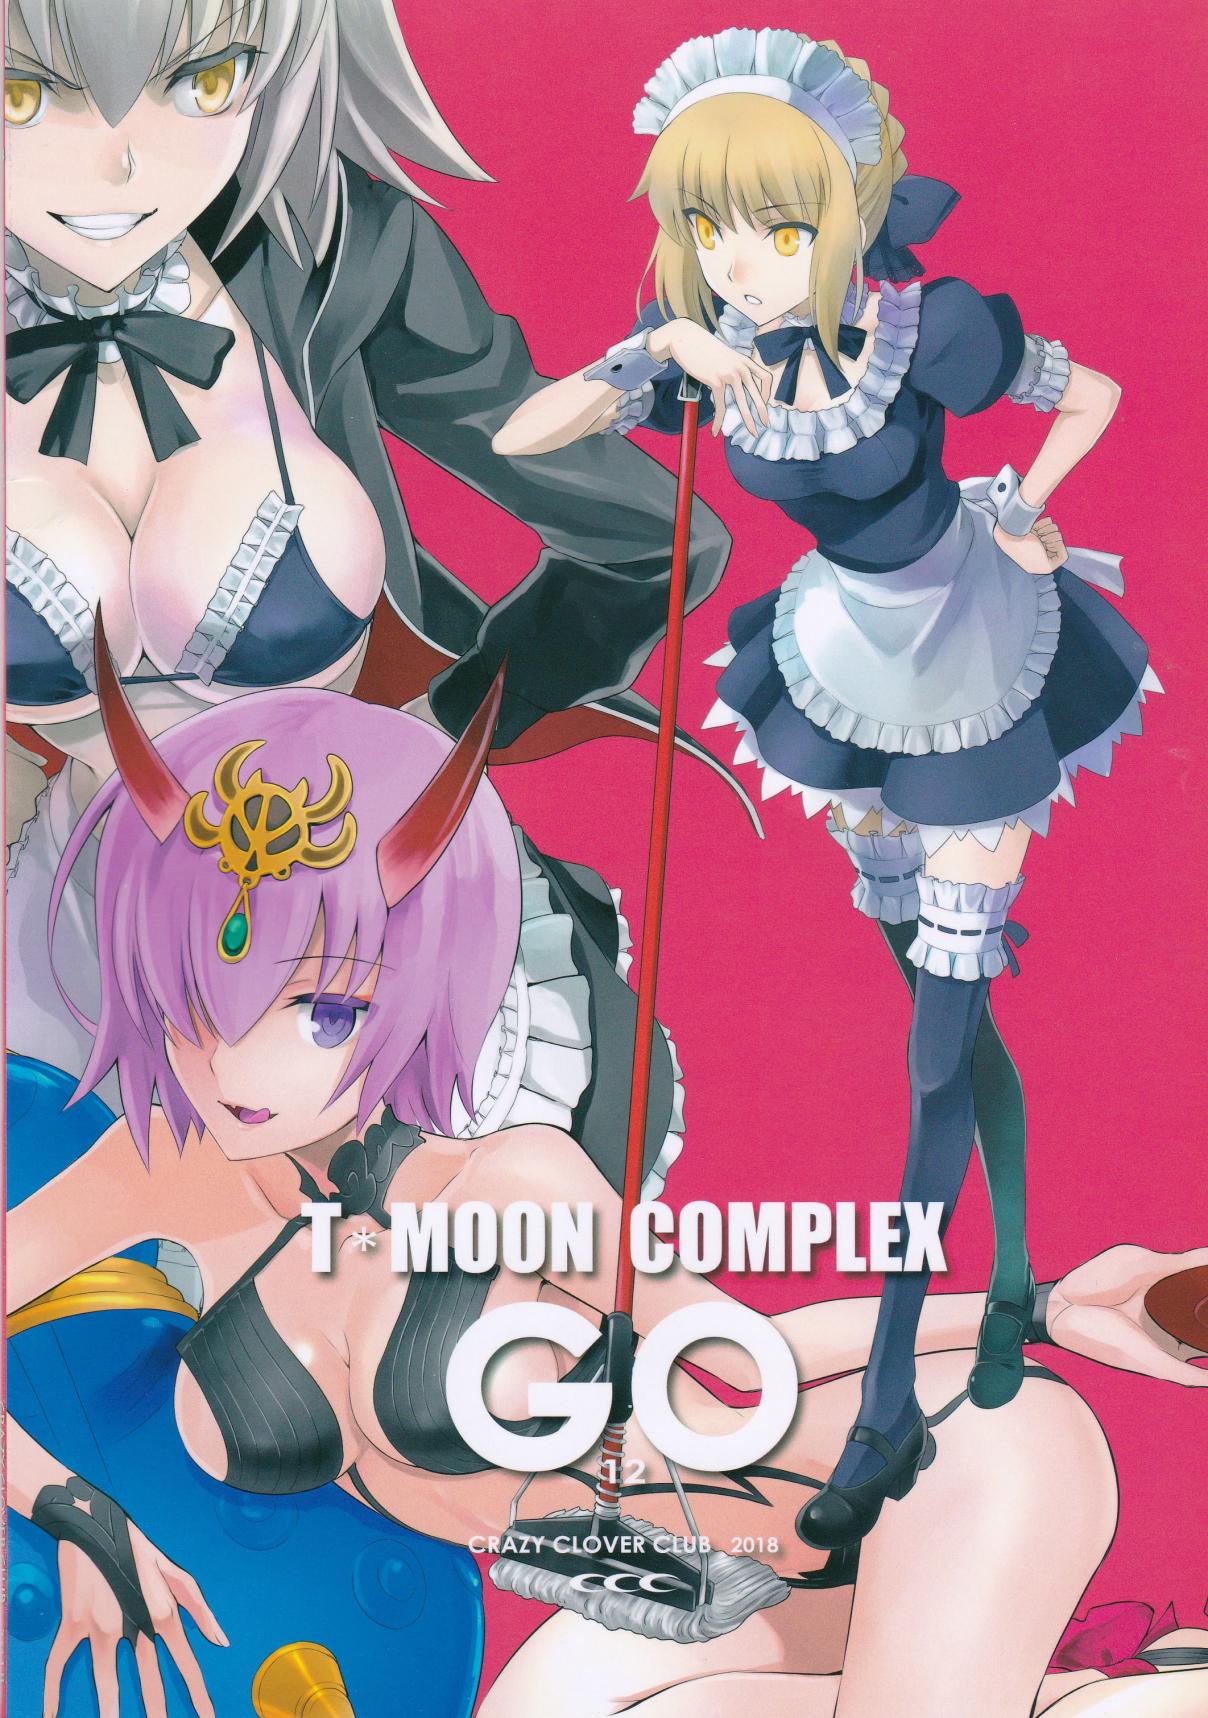 Fate/Grand Order T*Moon Complex GO Ch. 12